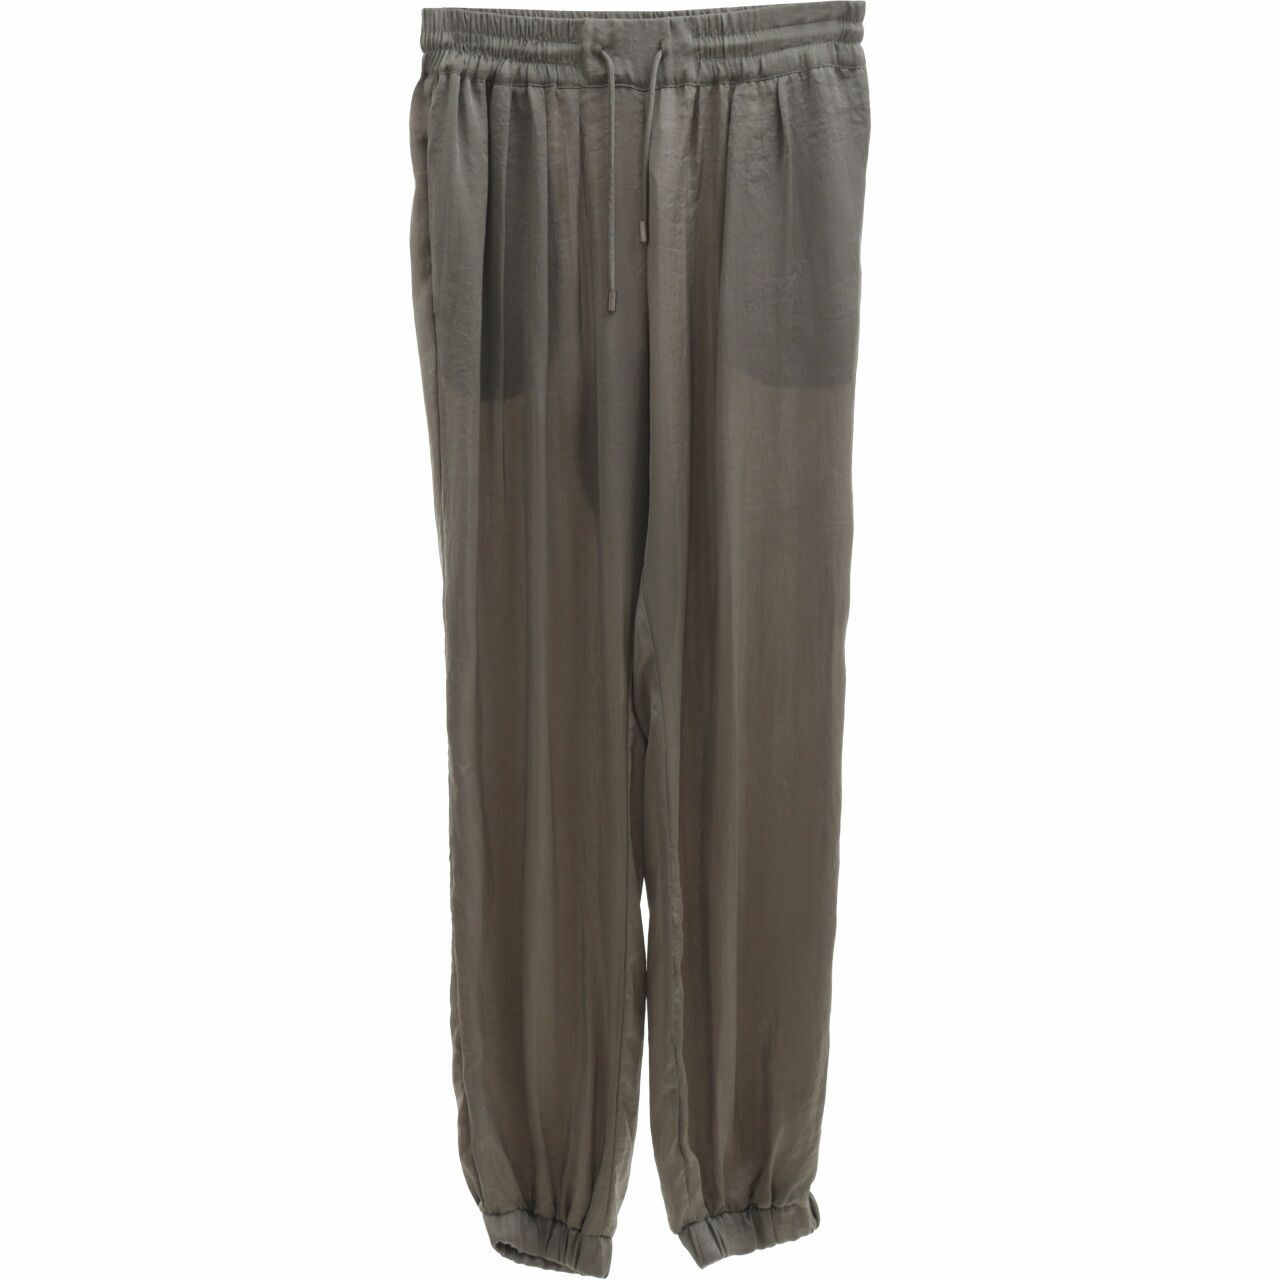 Zara Olive Long Pants